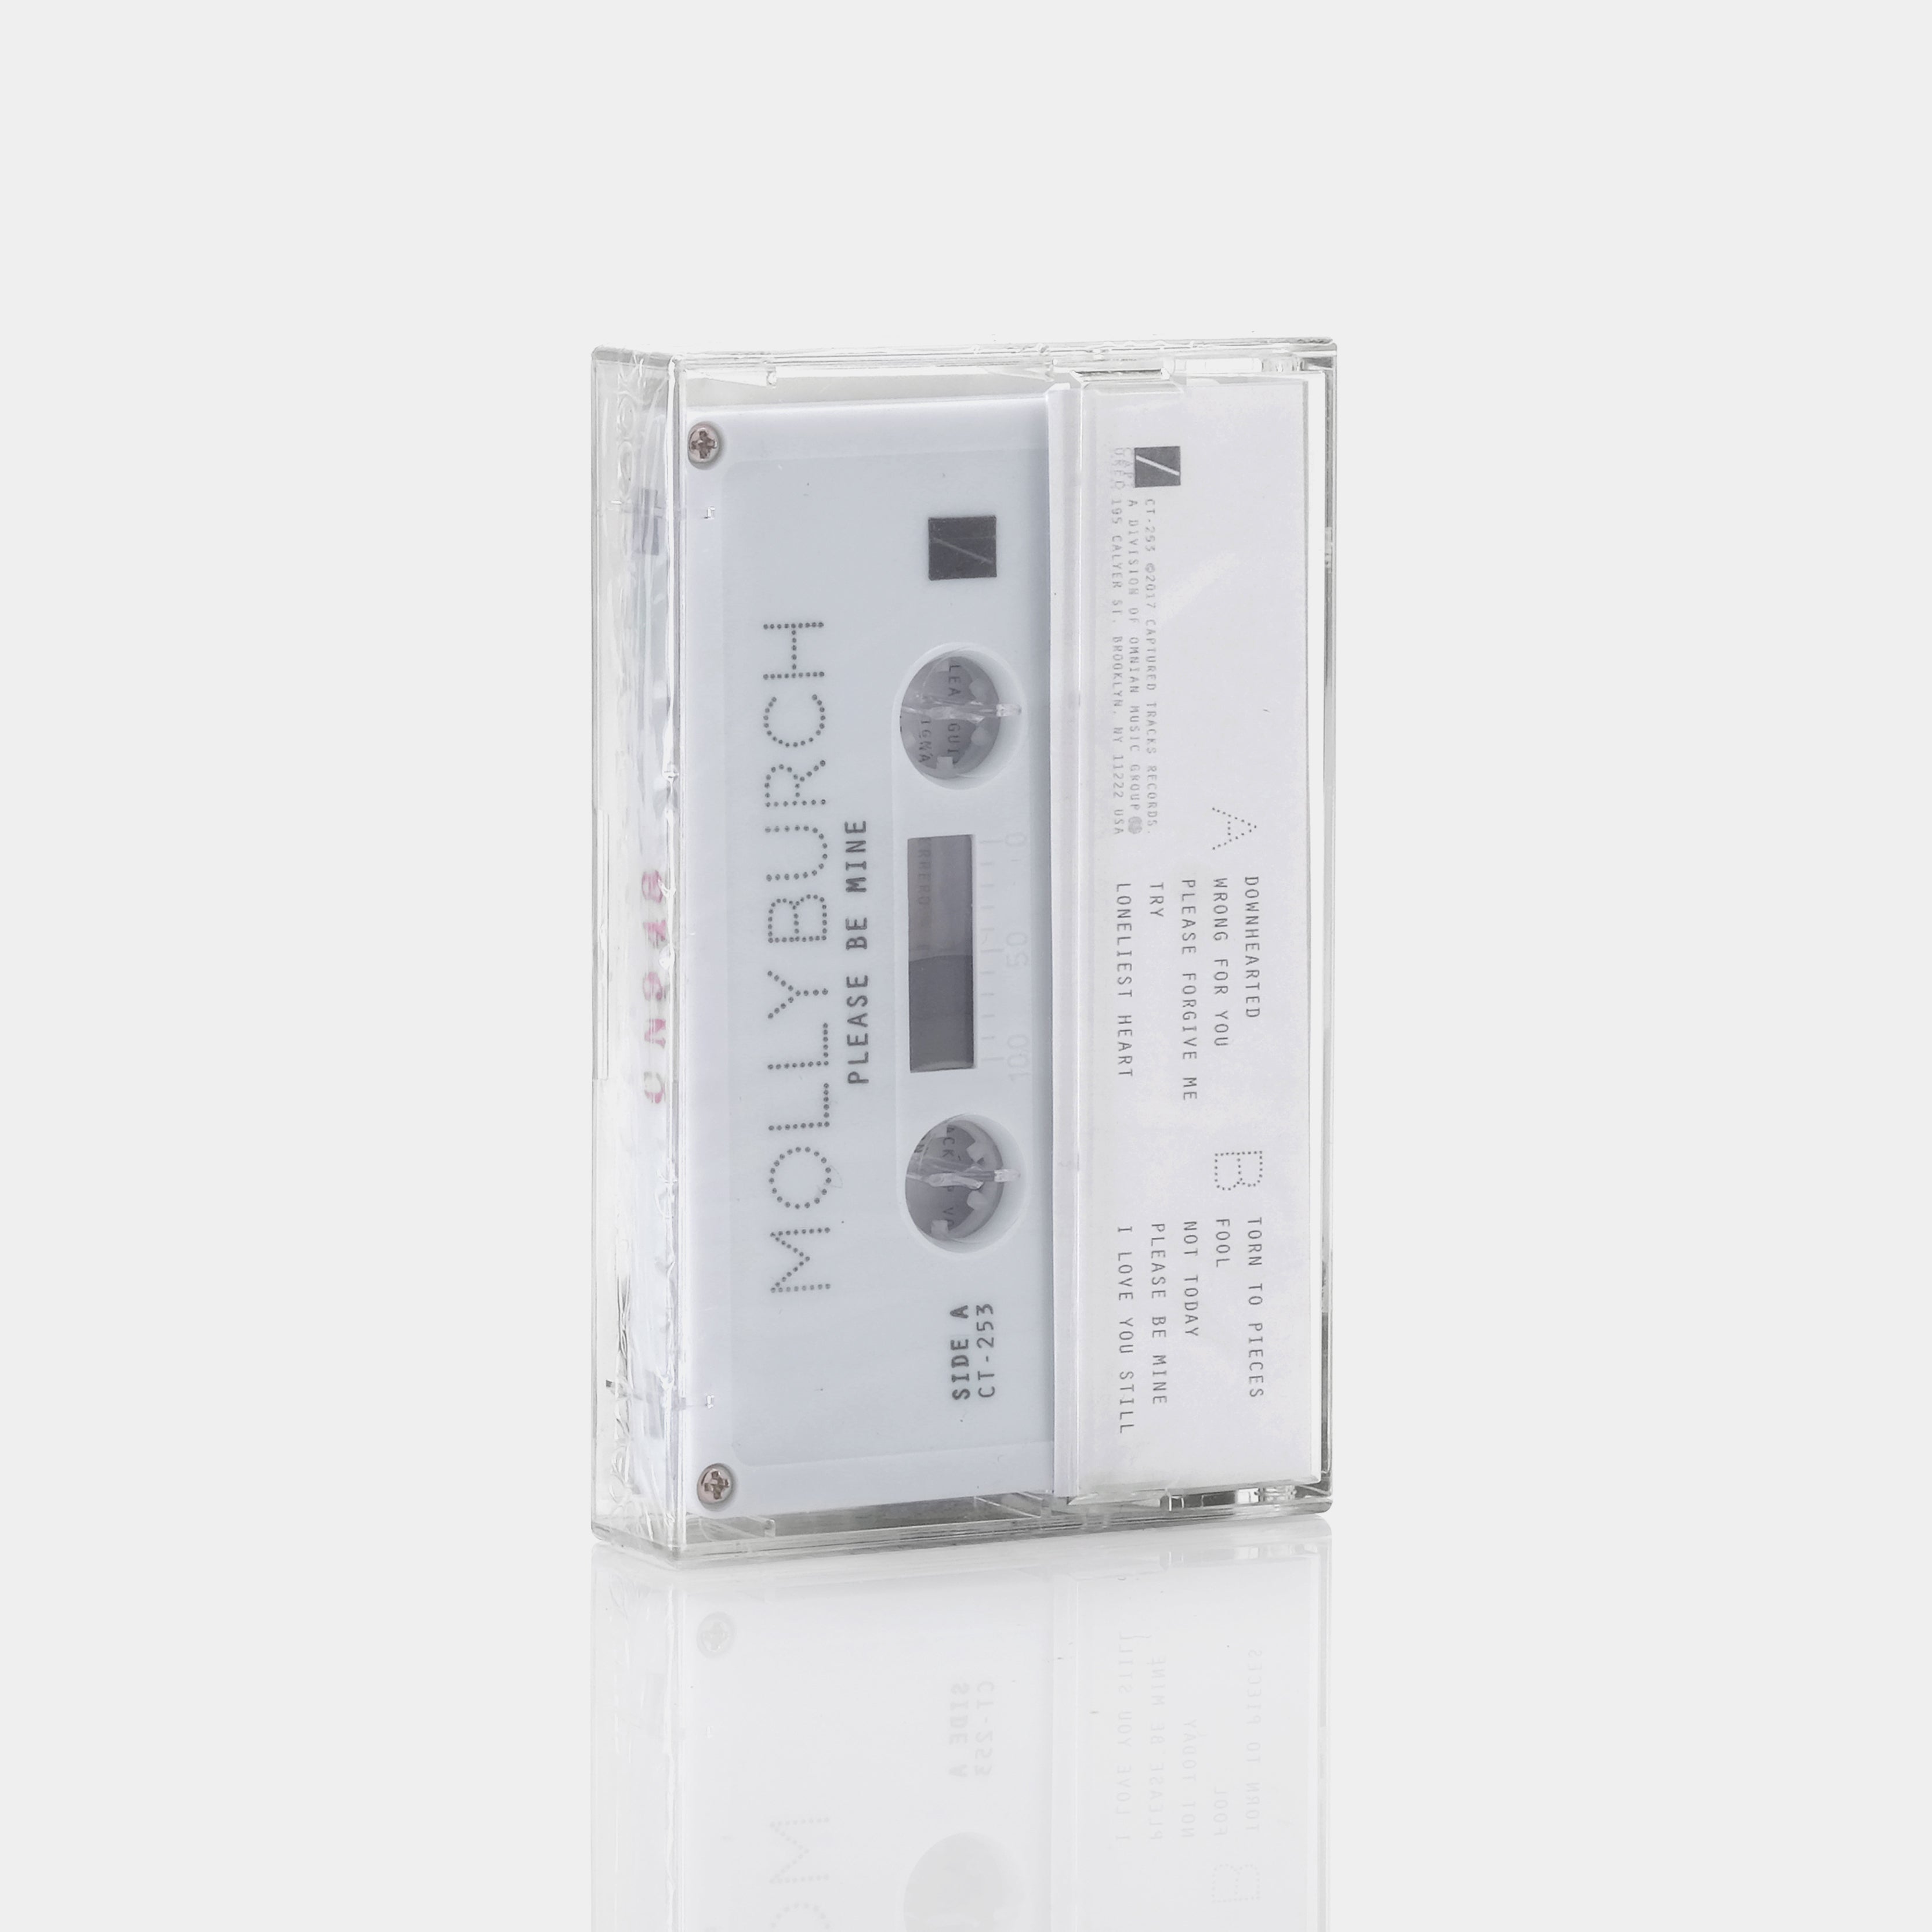 Molly Burch - Please Be Mine Cassette Tape